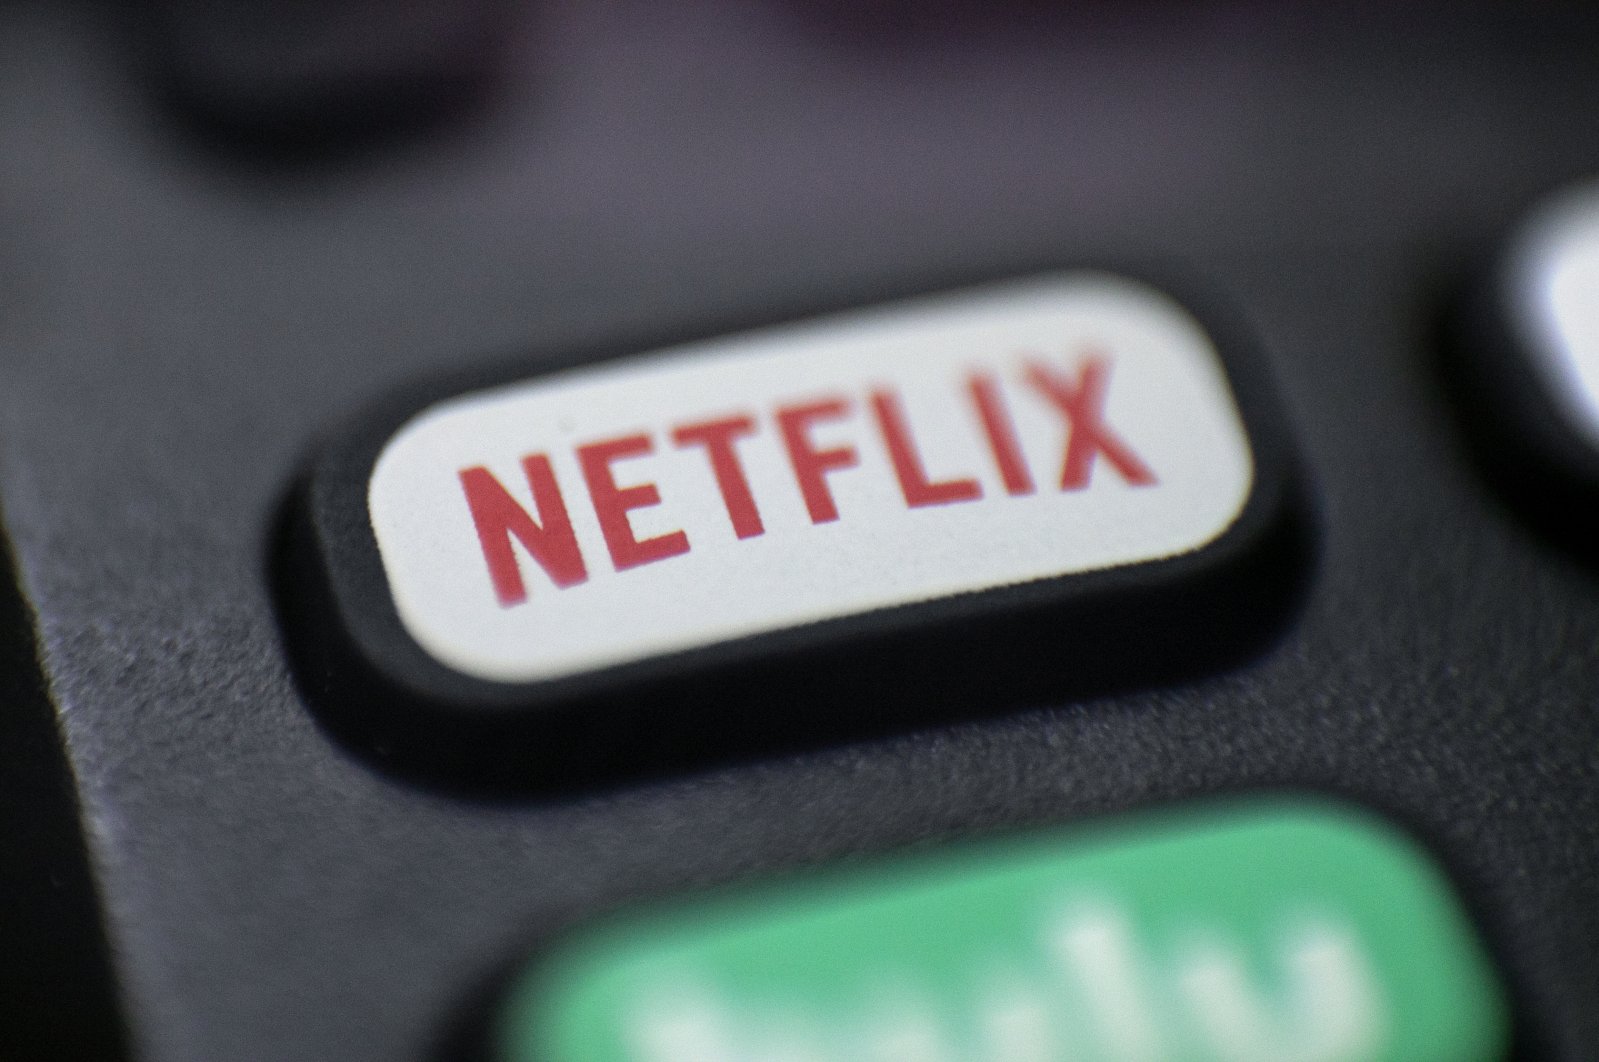 A Netflix logo is seen on a remote control in Portland, Oregon, Aug. 13, 2020. (AP Photo)